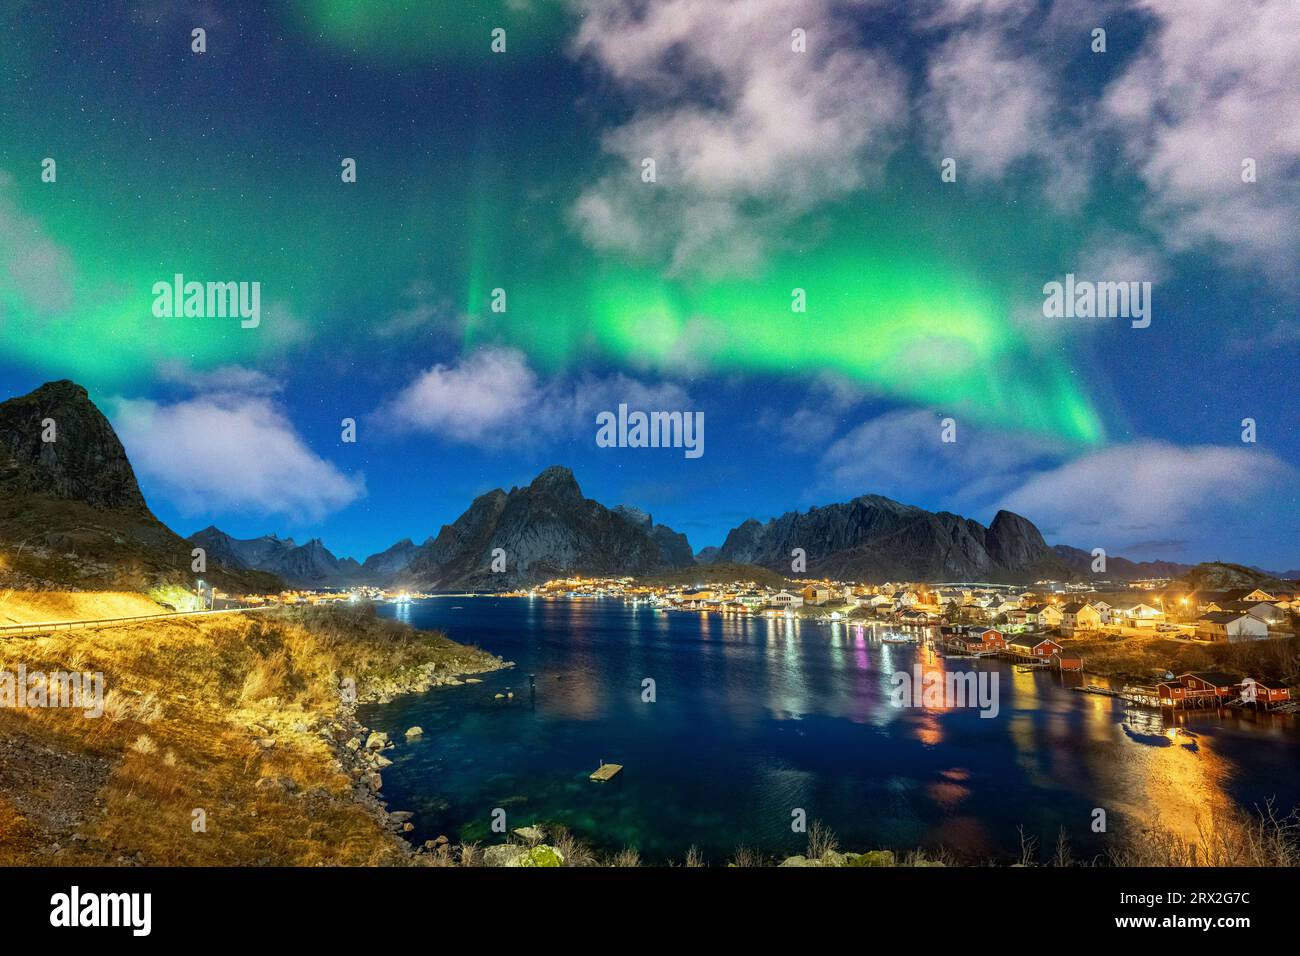 Illuminated harbor of Reine under the bright green lights of the Aurora Borealis (Northern Lights), Lofoten Islands, Nordland, Norway, Scandinavia Stock Photo